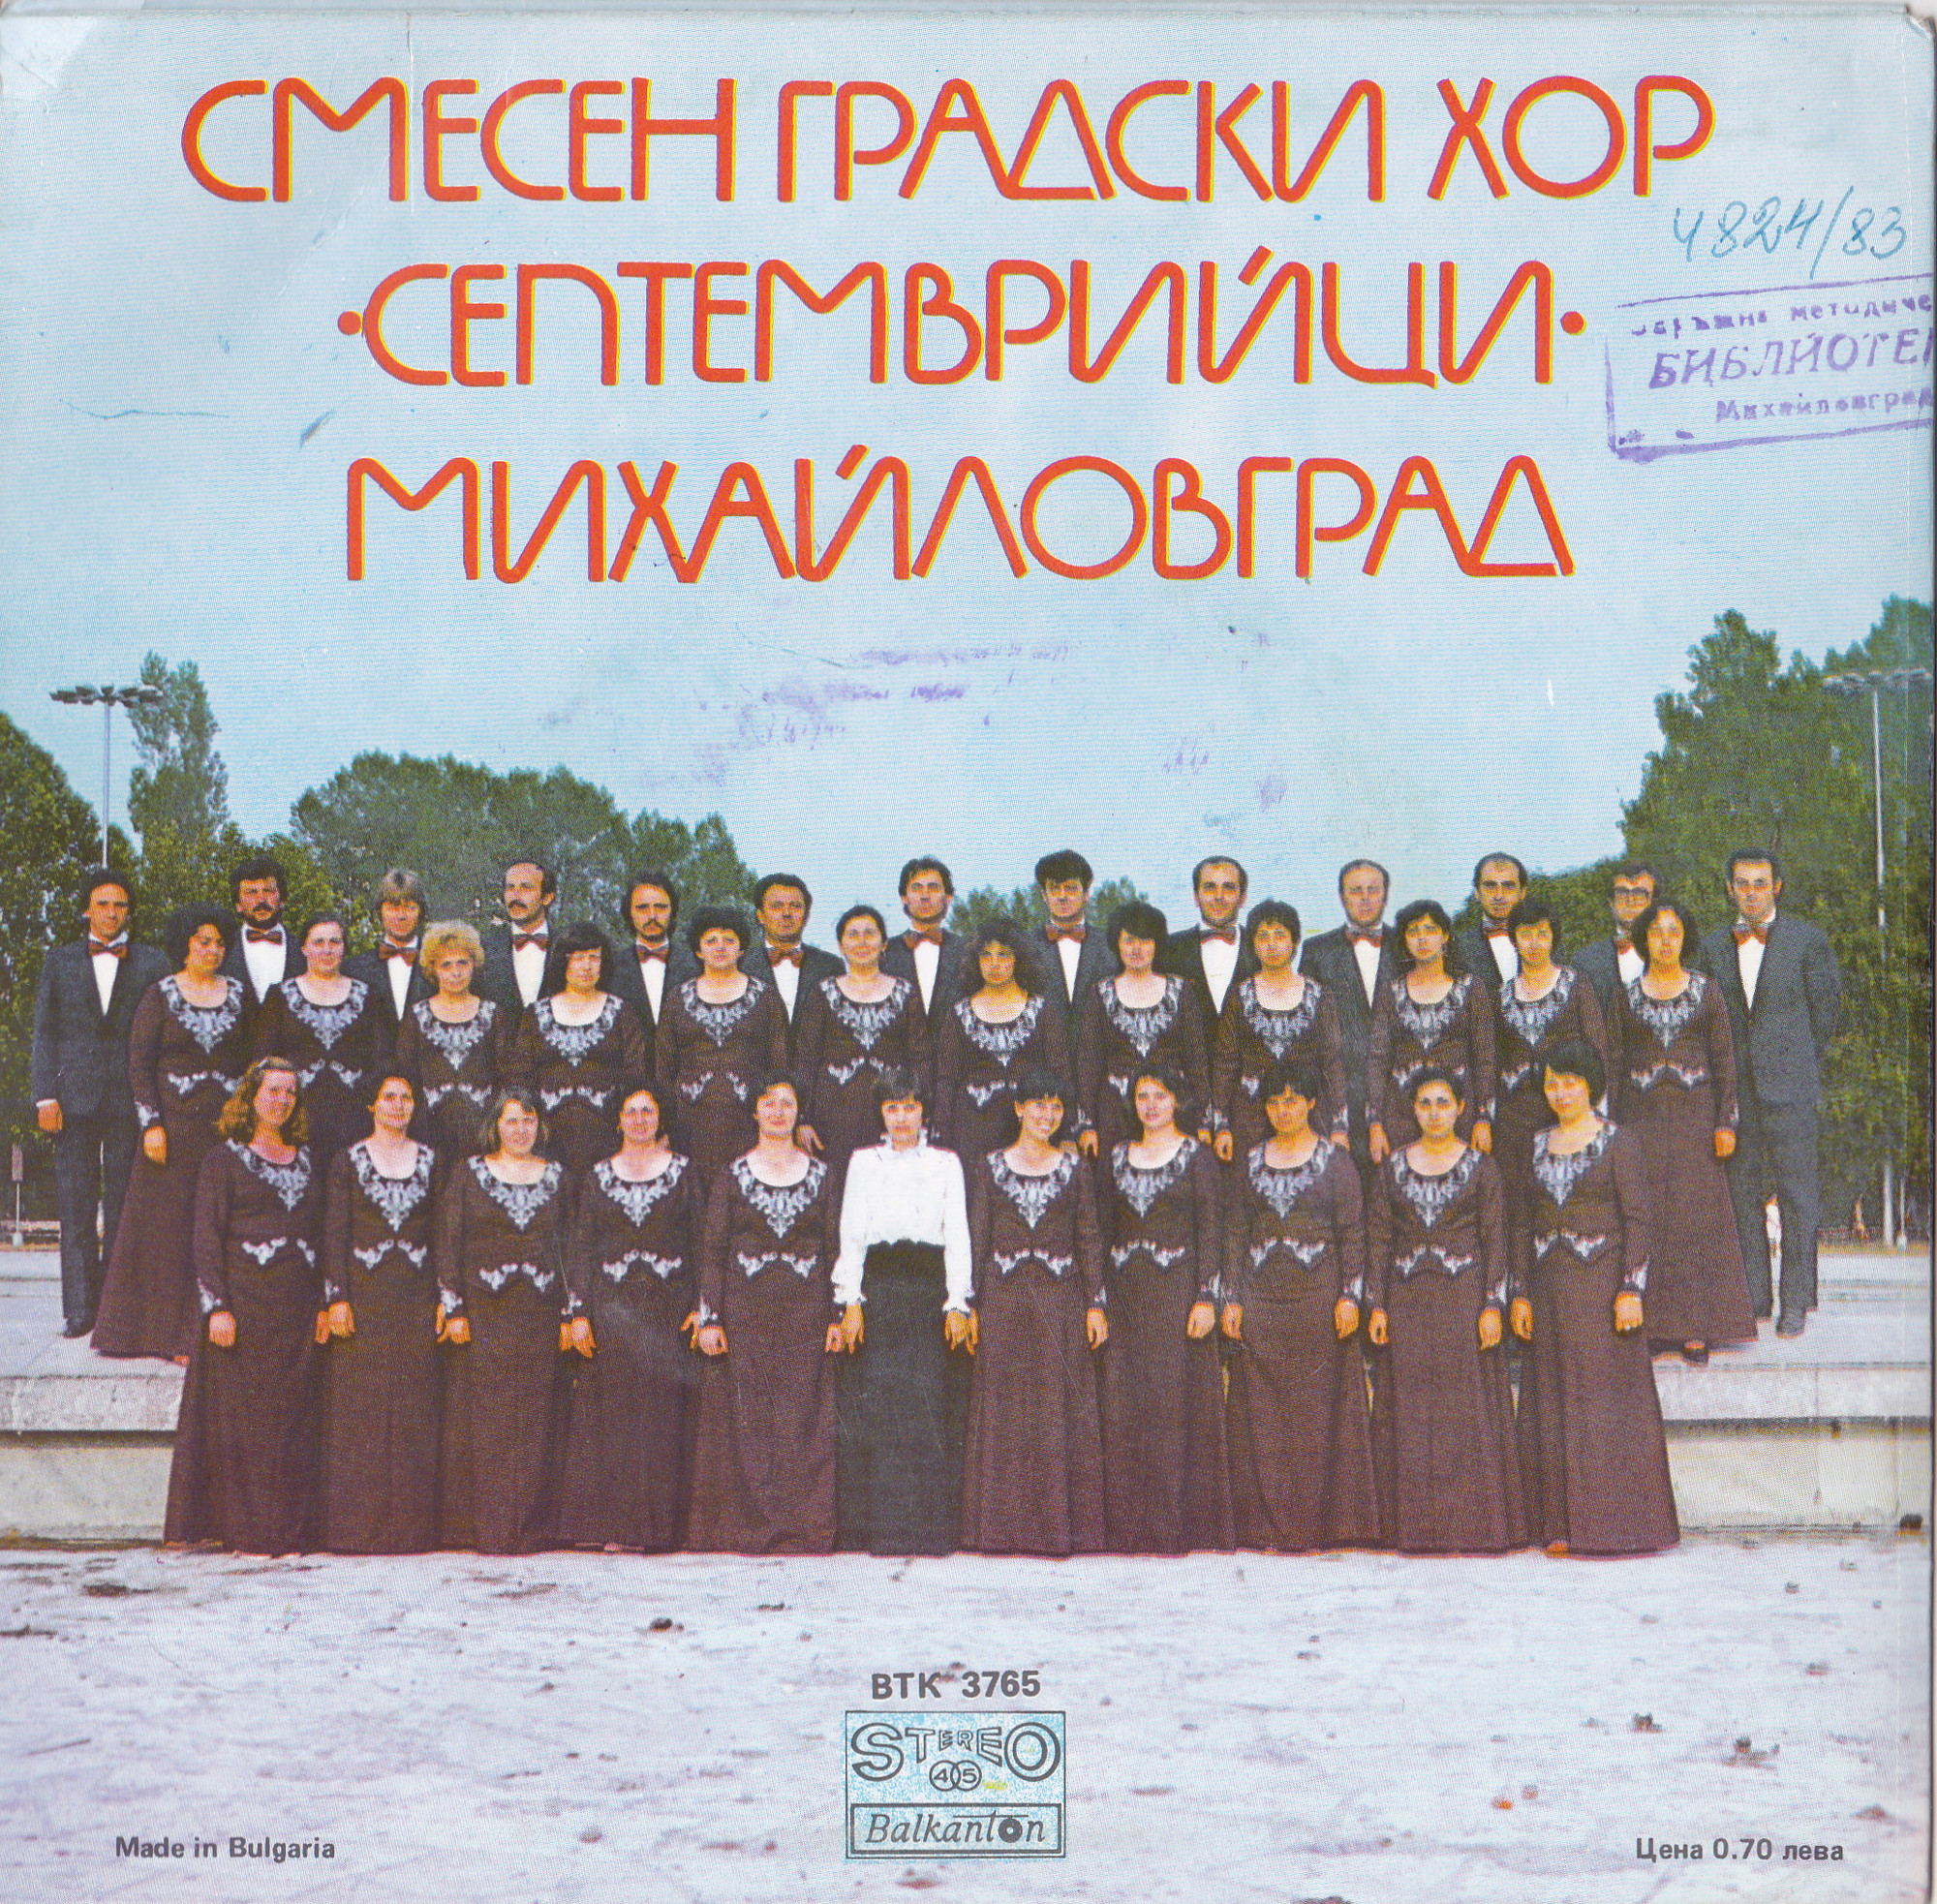 Смесен градски хор "Септемврийци", Михайловград